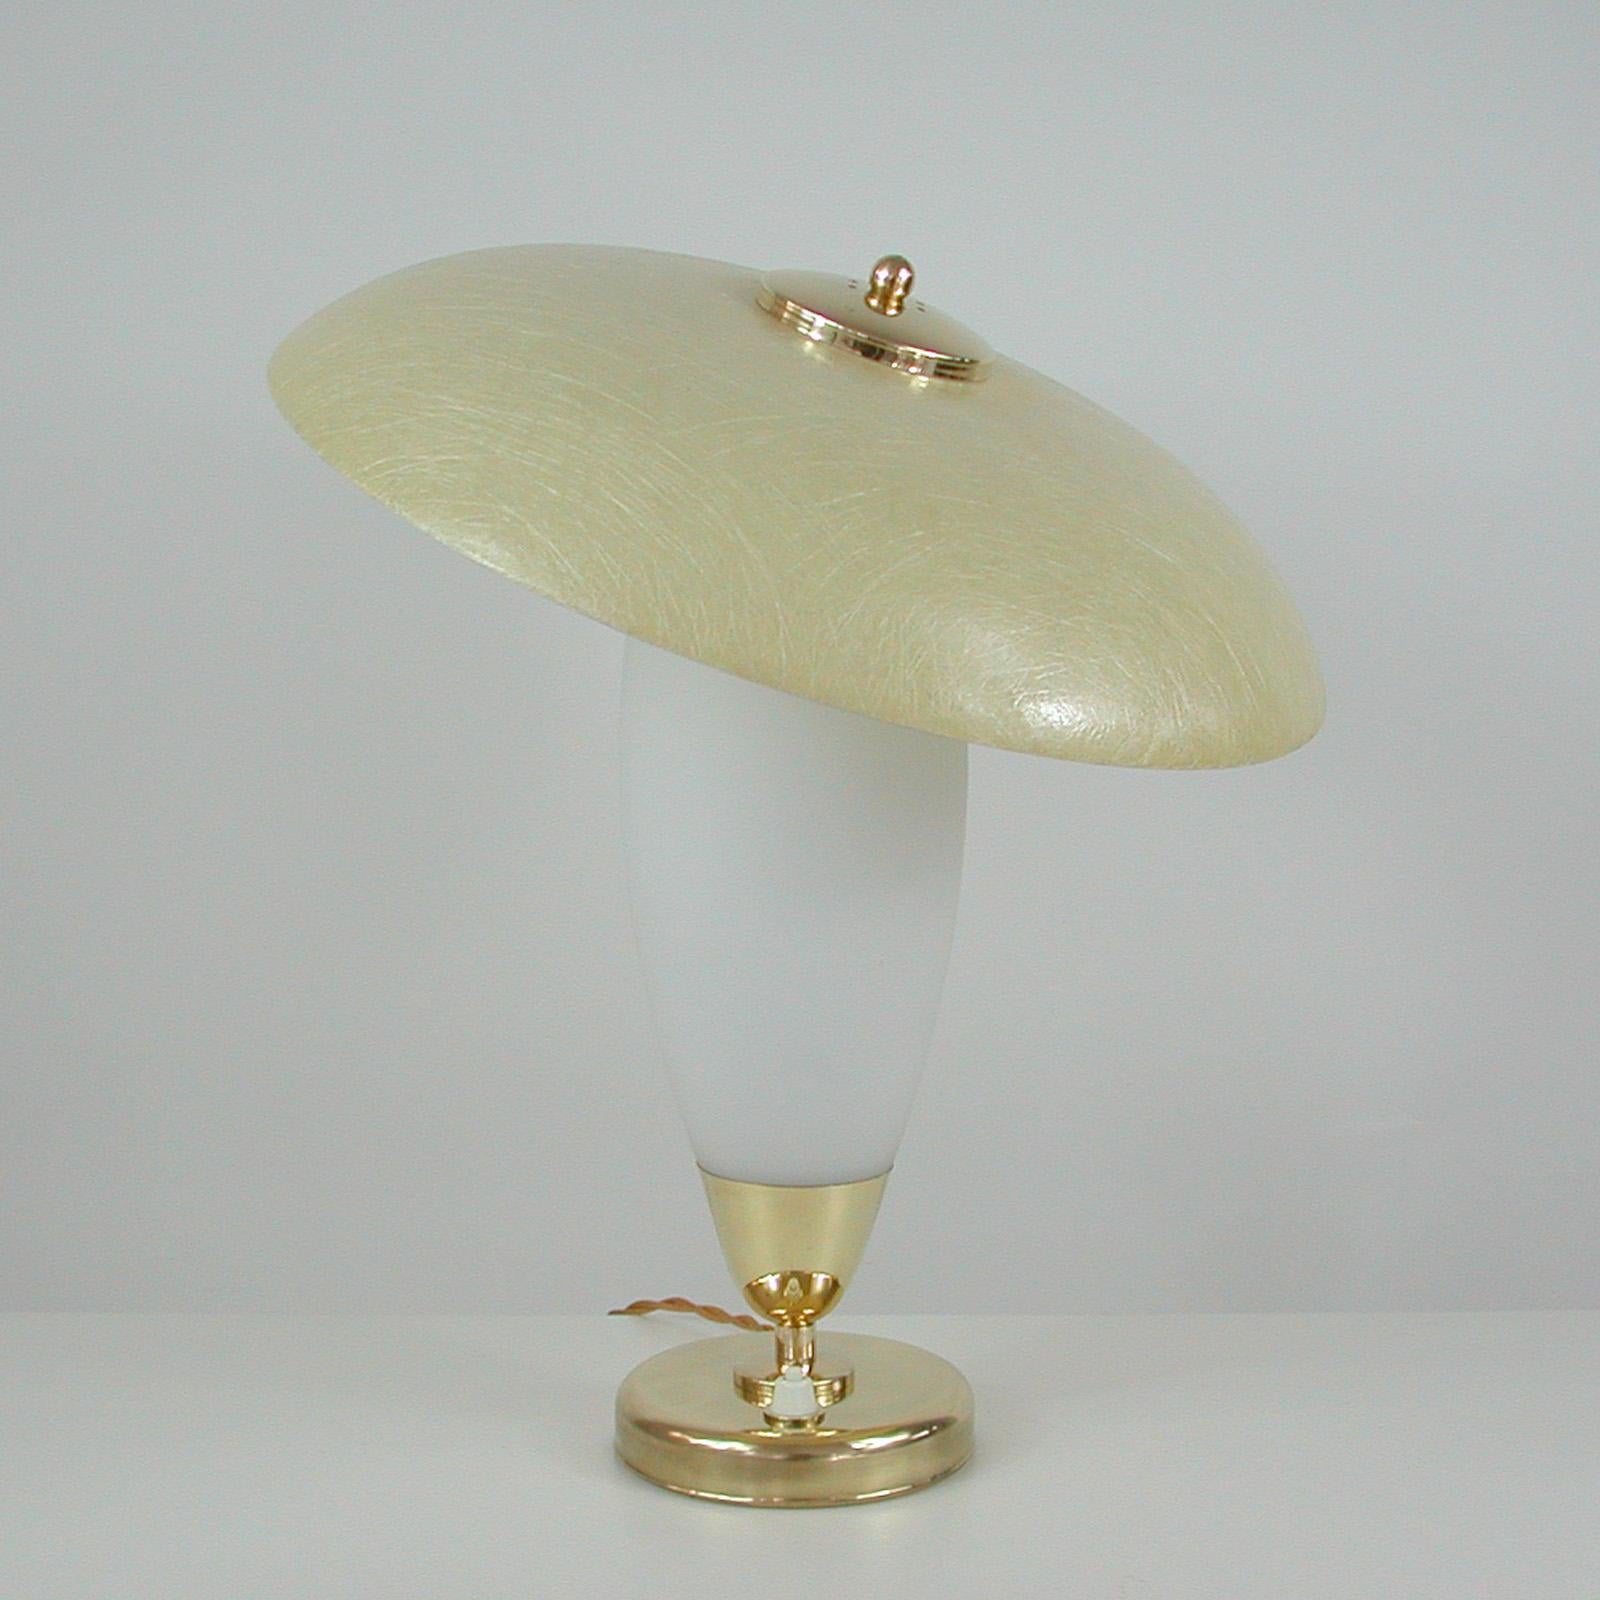 Midcentury Swedish Modern Brass, Opaline and Fiberglass Saucer Table Lamp, 1950s For Sale 11